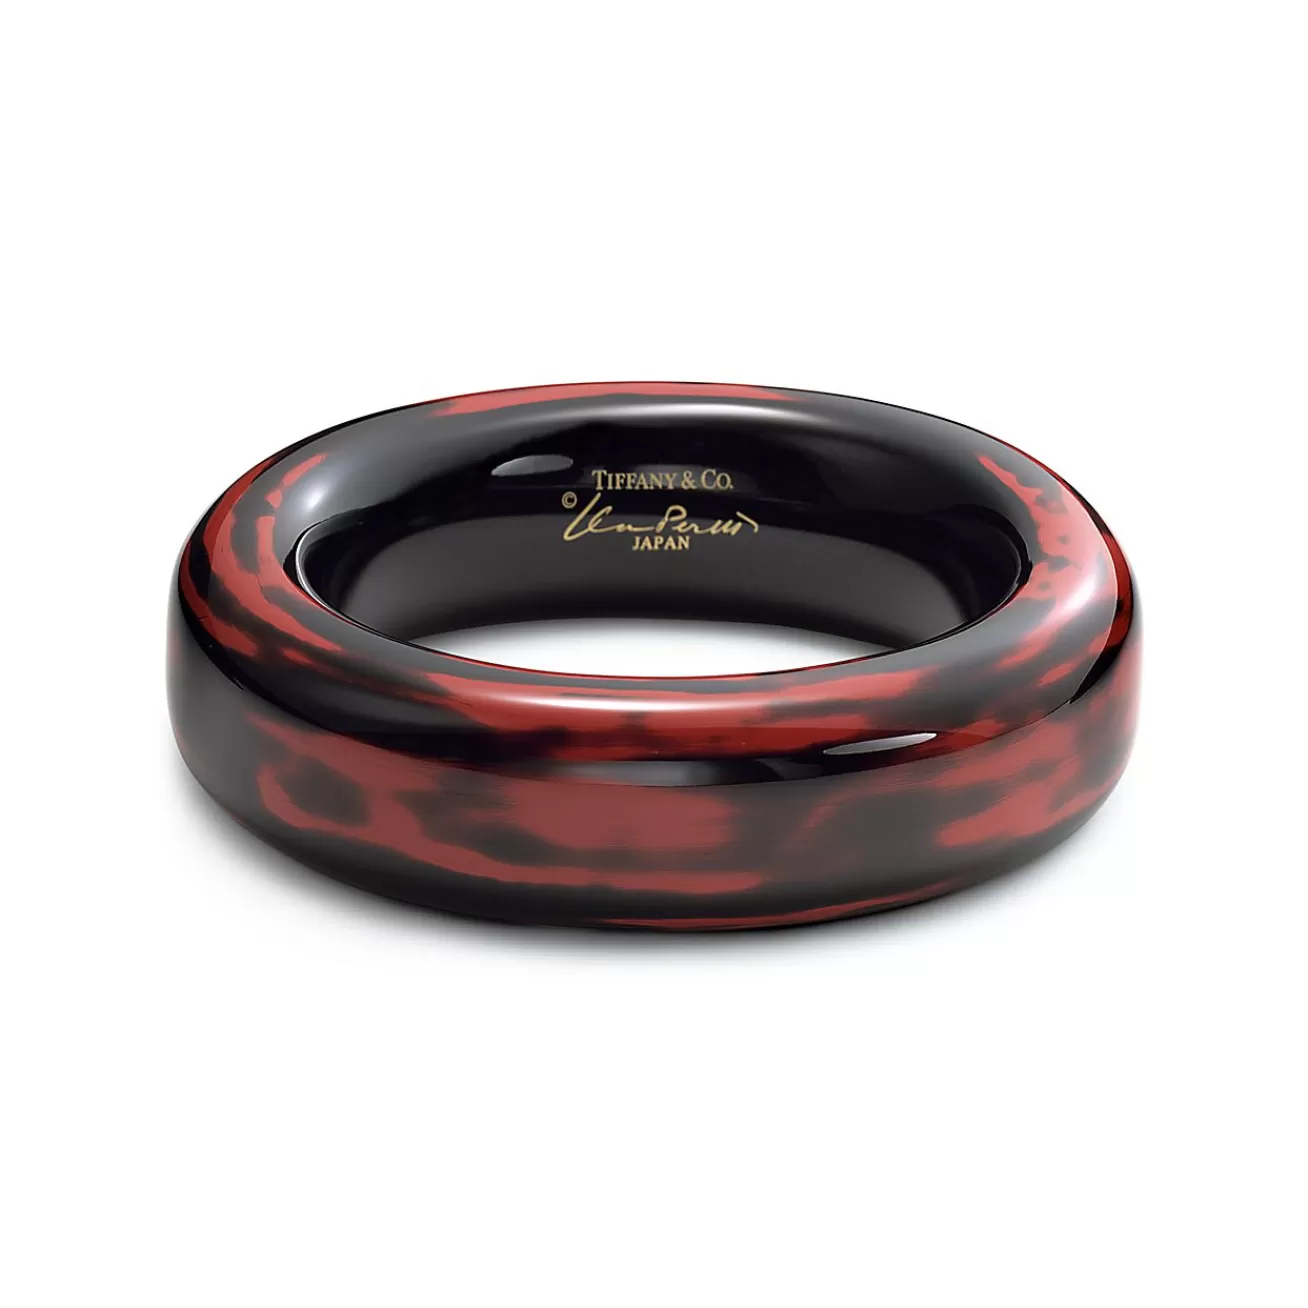 Tiffany & Co. Elsa Peretti® bangle in red and black lacquer over Japanese hardwood, small. | ^ Elsa Peretti®